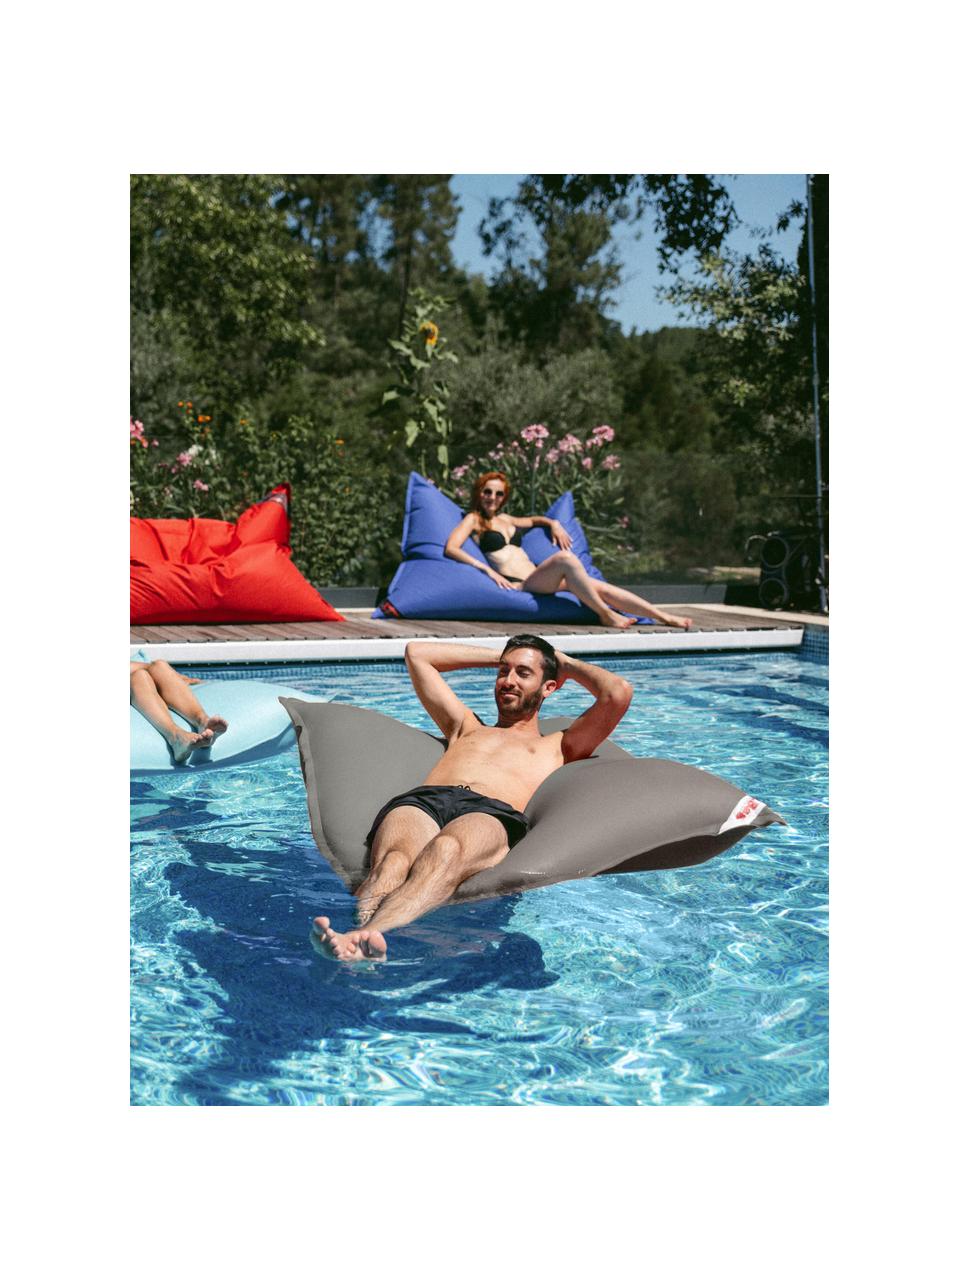 Pool-Sitzsack Calypso, Bezug: 100% Polyester (Mesh), Dunkelgrau, L 142 x B 115 cm